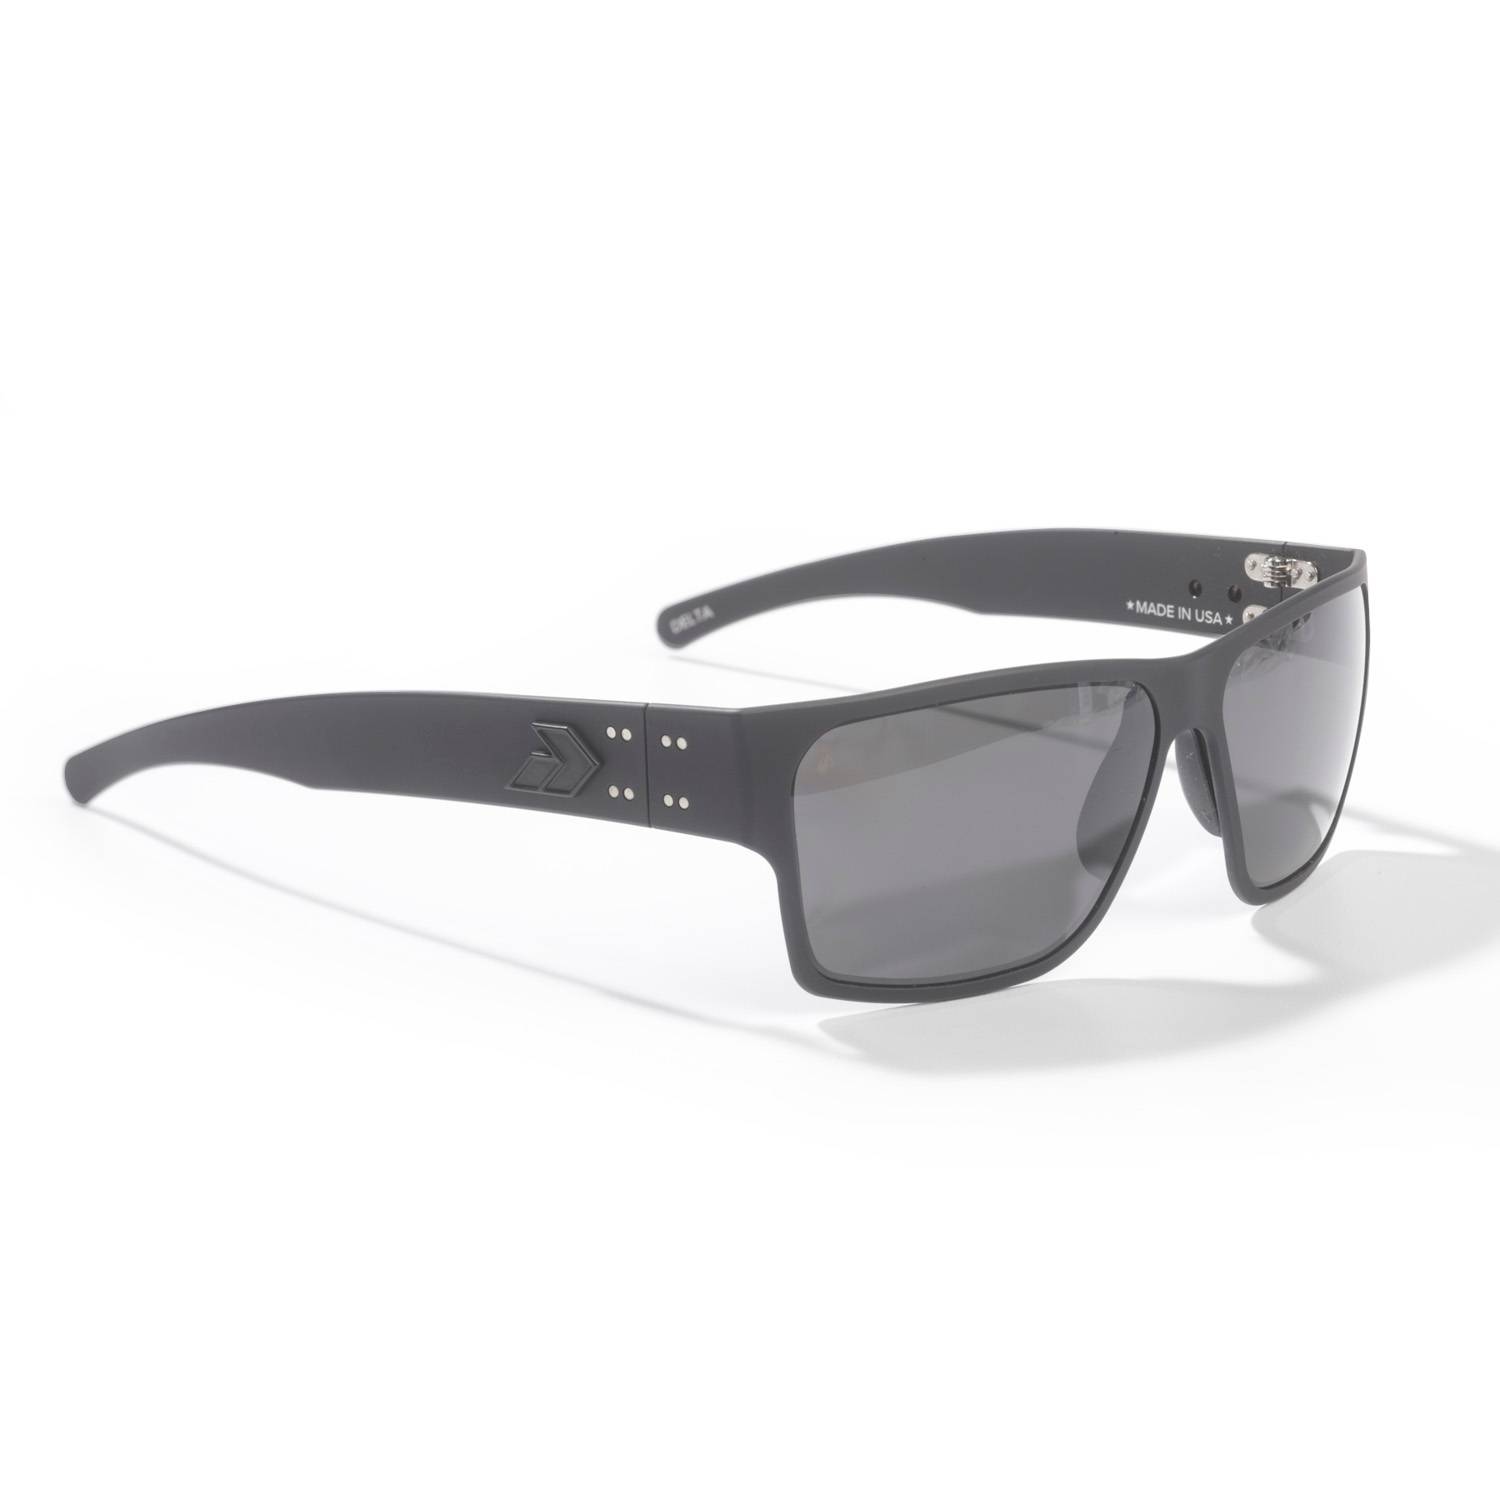 Gatorz Delta Matte Black/Smoked Polarized Sunglasses